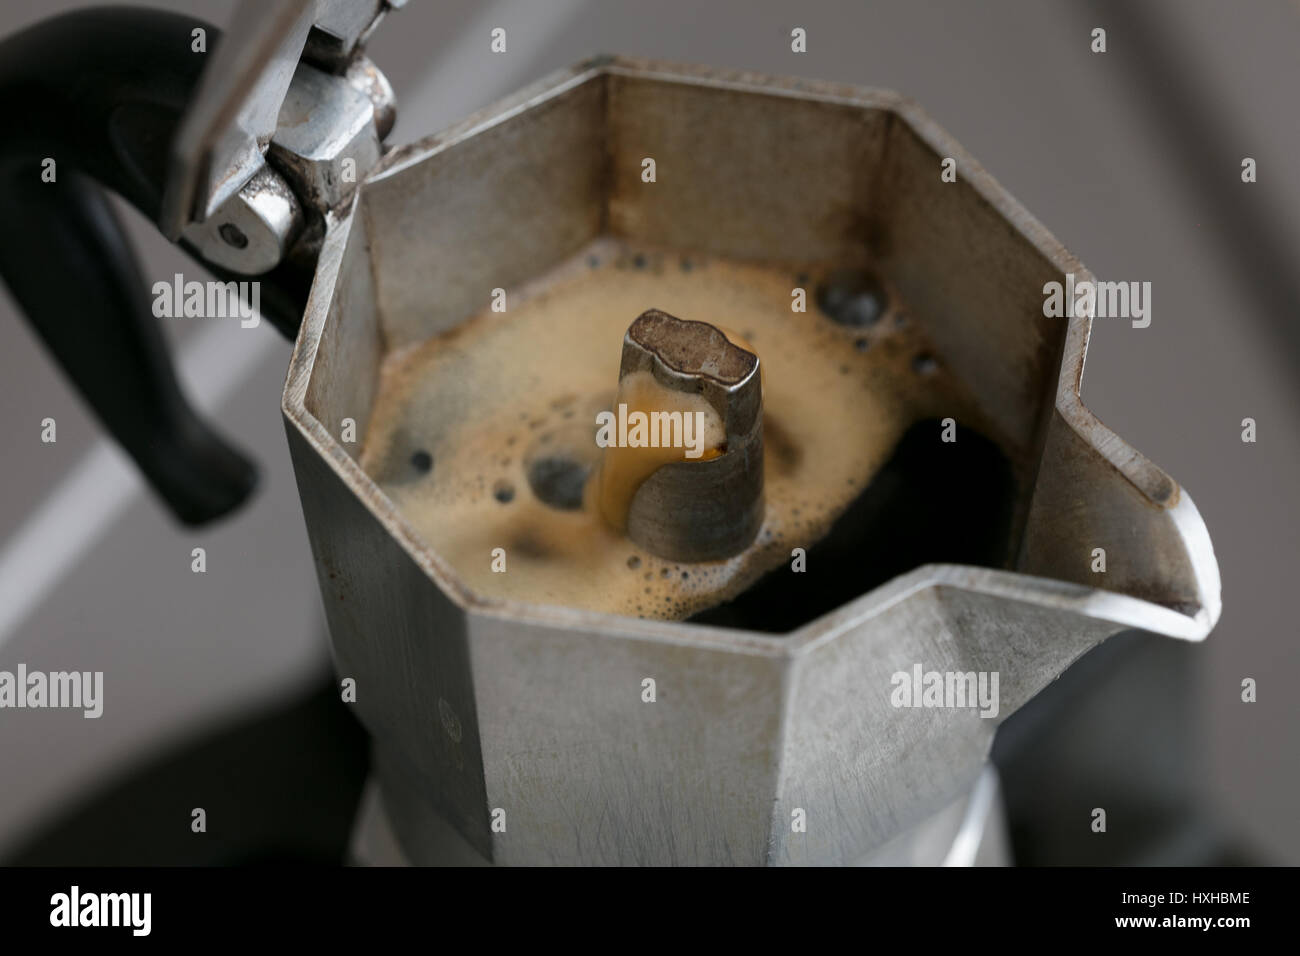 https://c8.alamy.com/comp/HXHBME/neapolitan-coffee-machine-on-the-fire-close-up-HXHBME.jpg